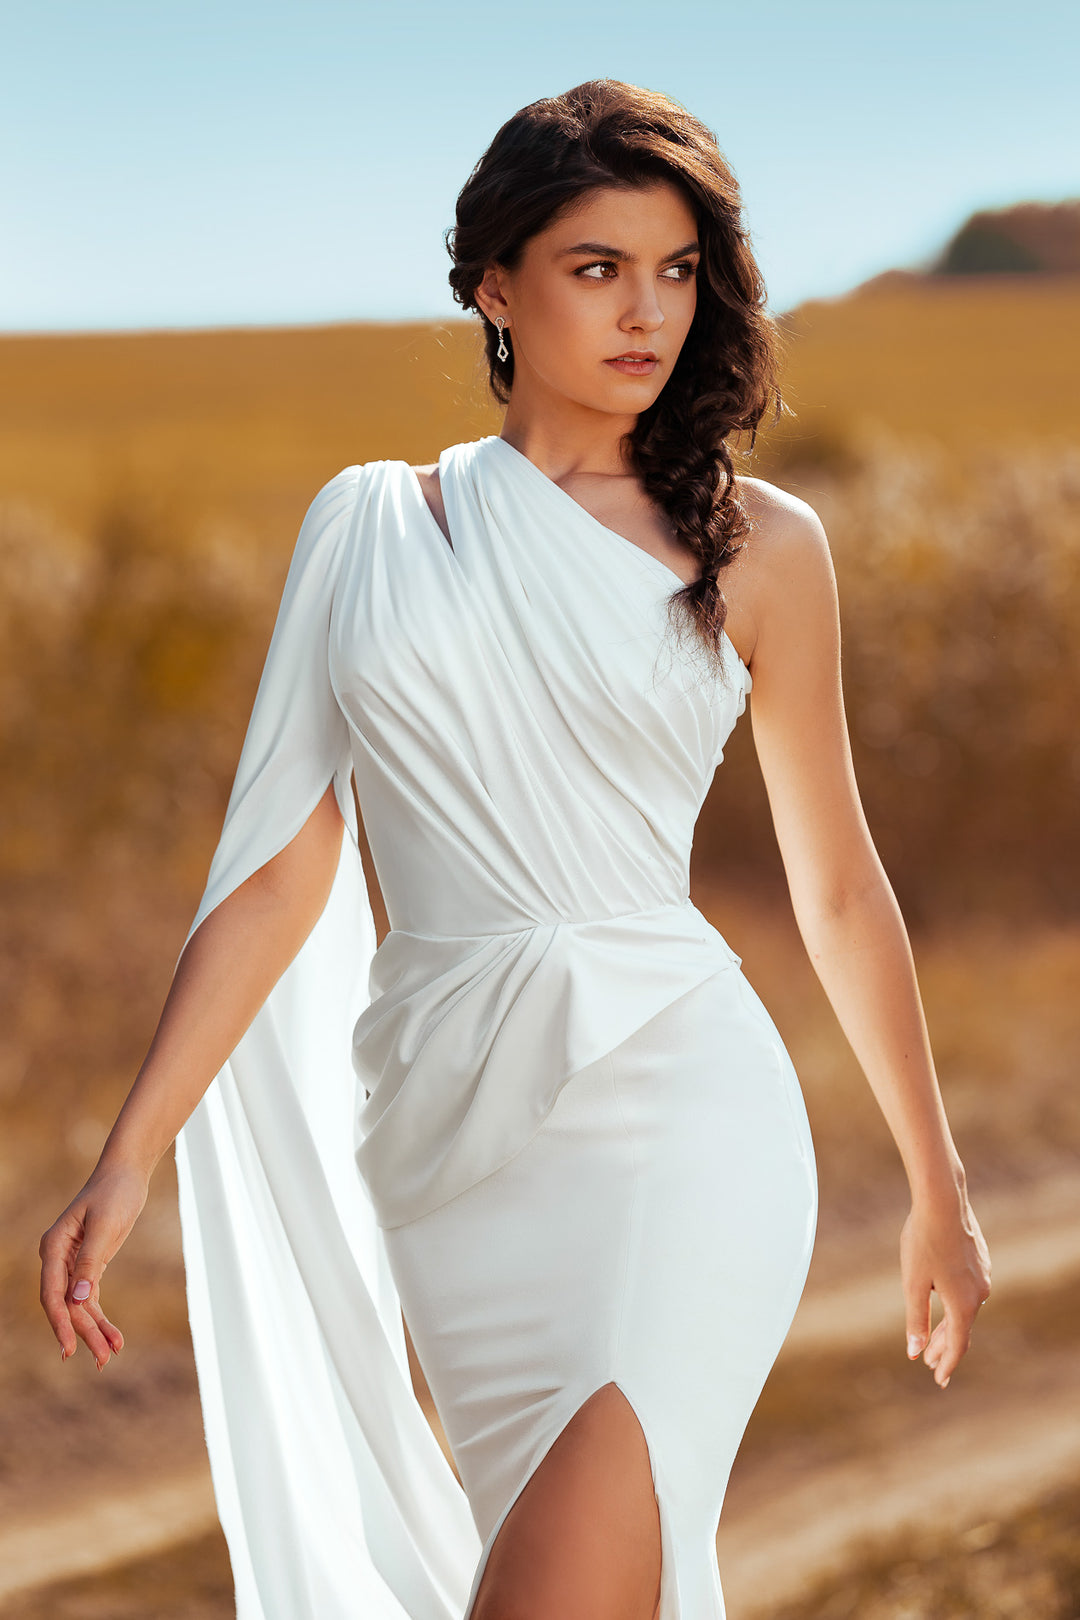 Hera Ivory Crepe Long Dress